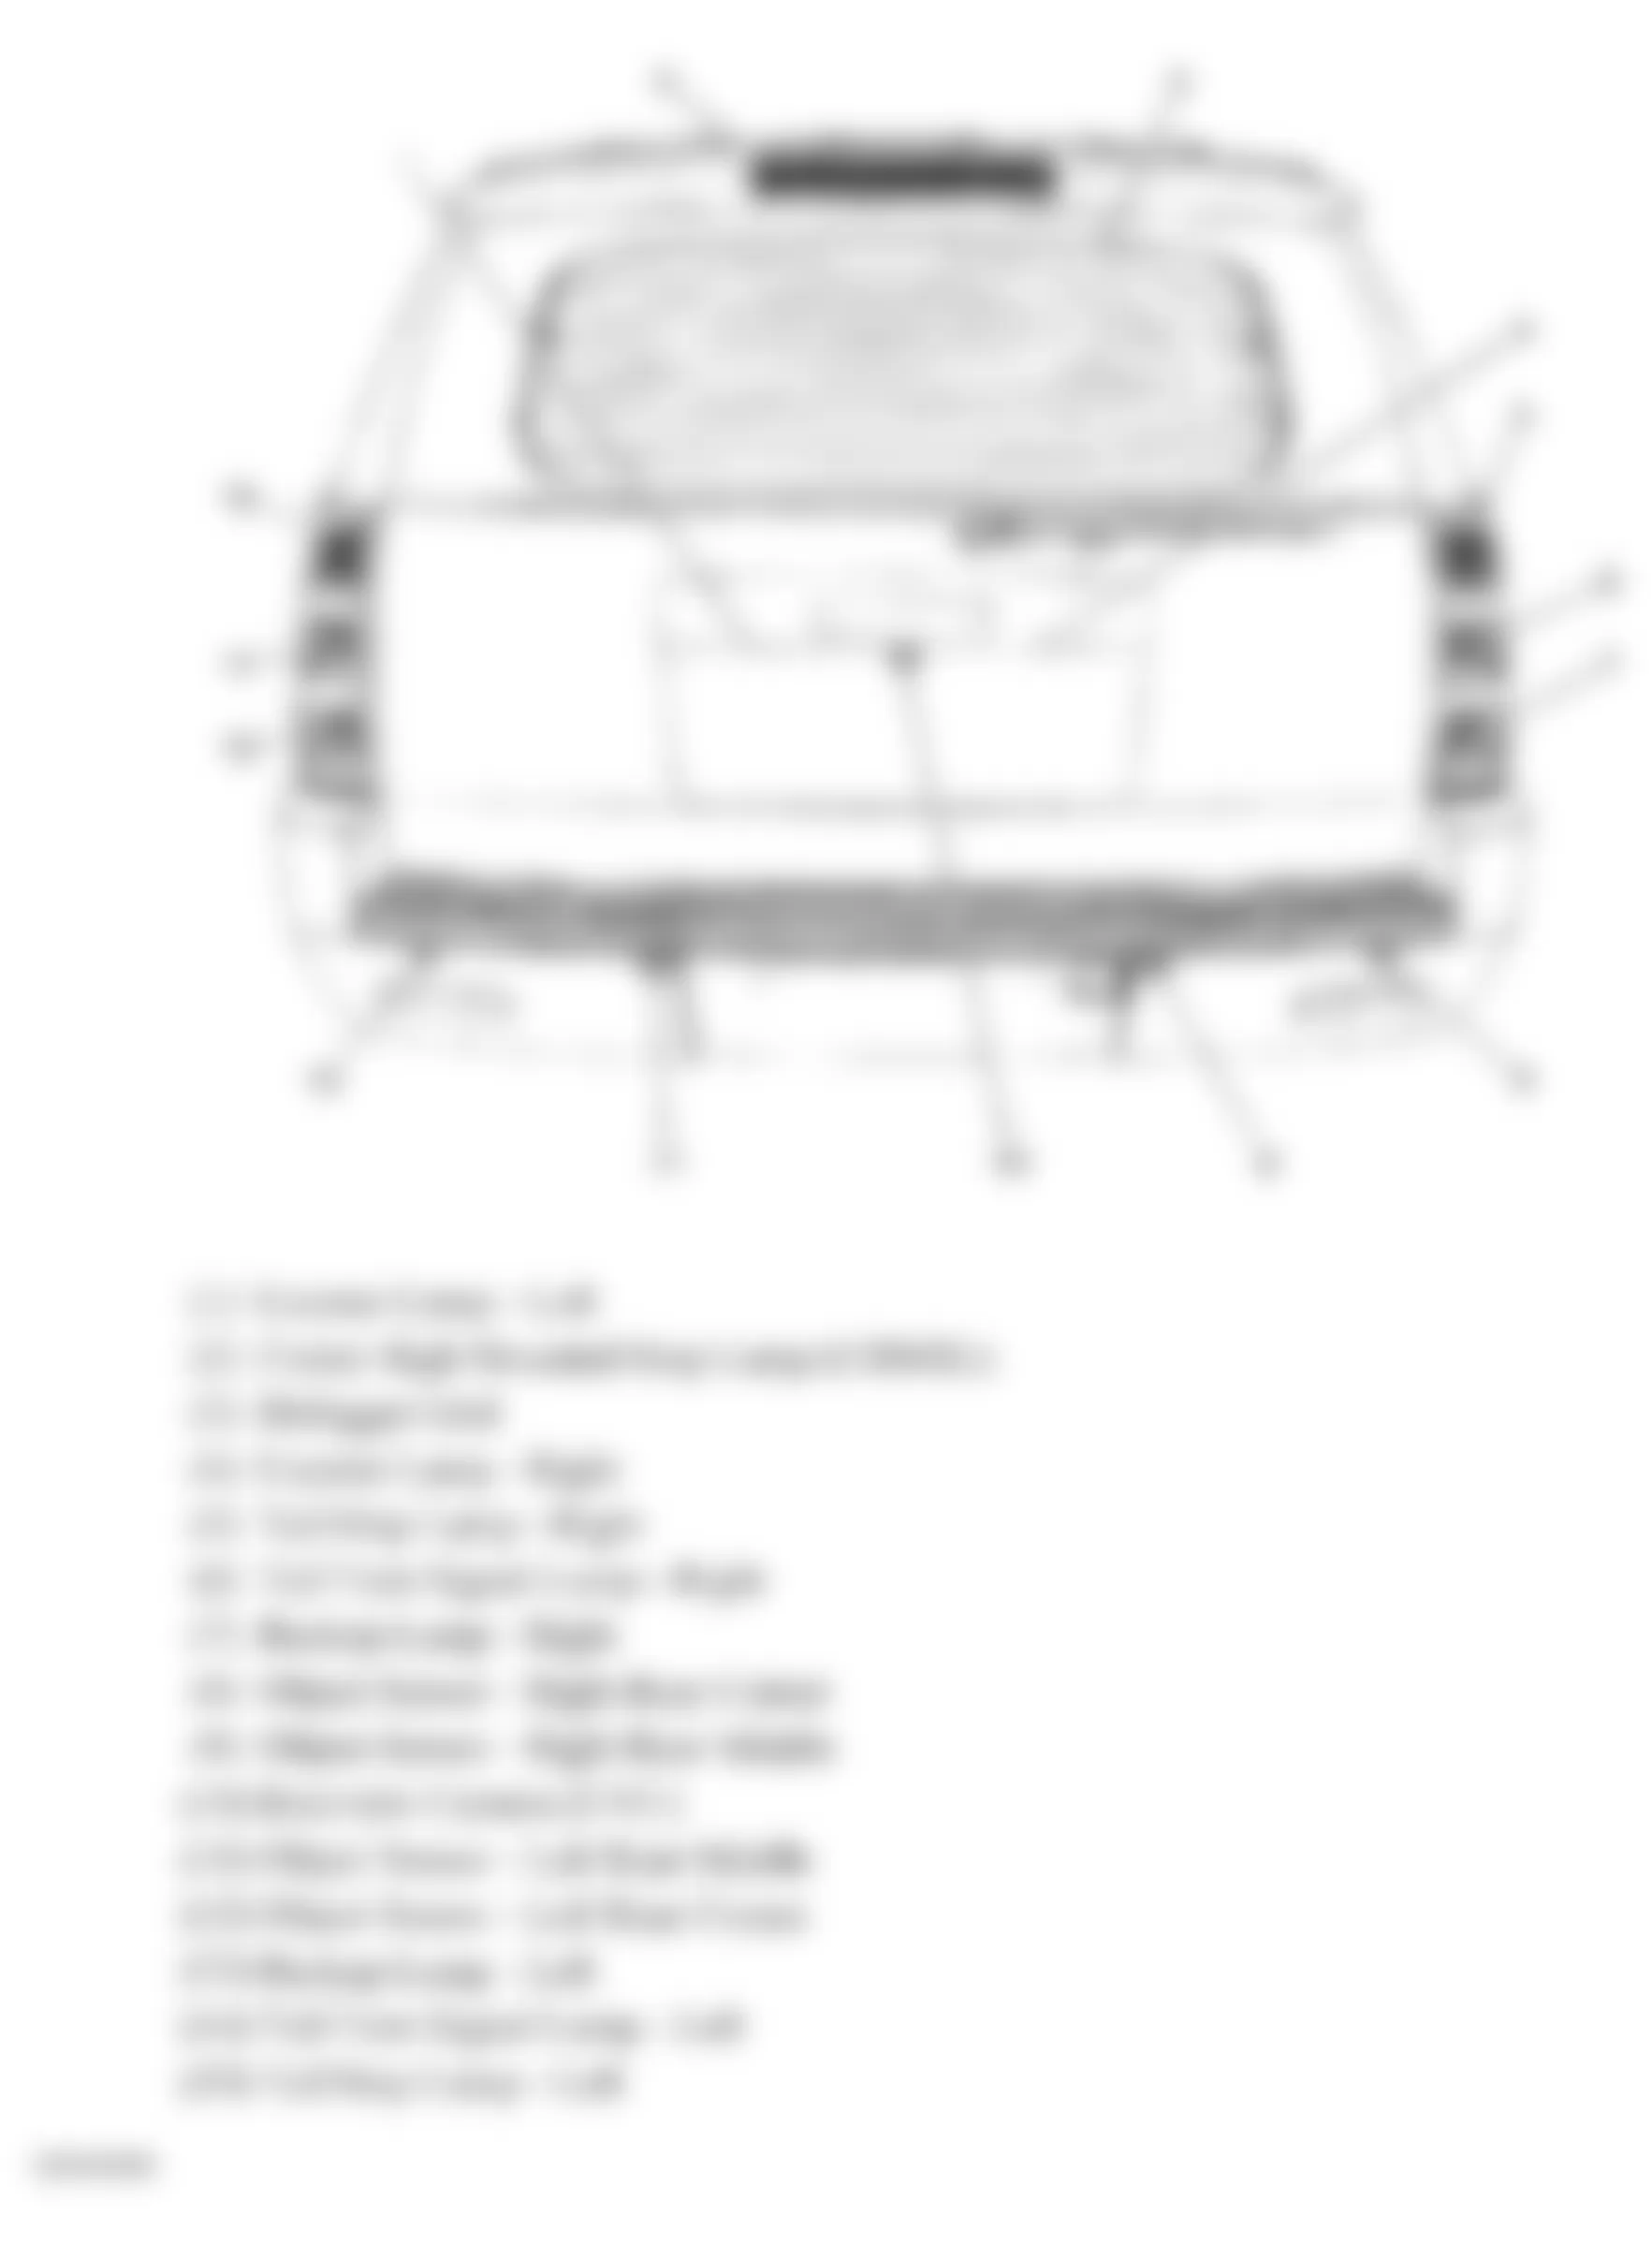 GMC Yukon 2010 - Component Locations -  Rear Of Vehicle (Yukon W/One Piece Liftgate)